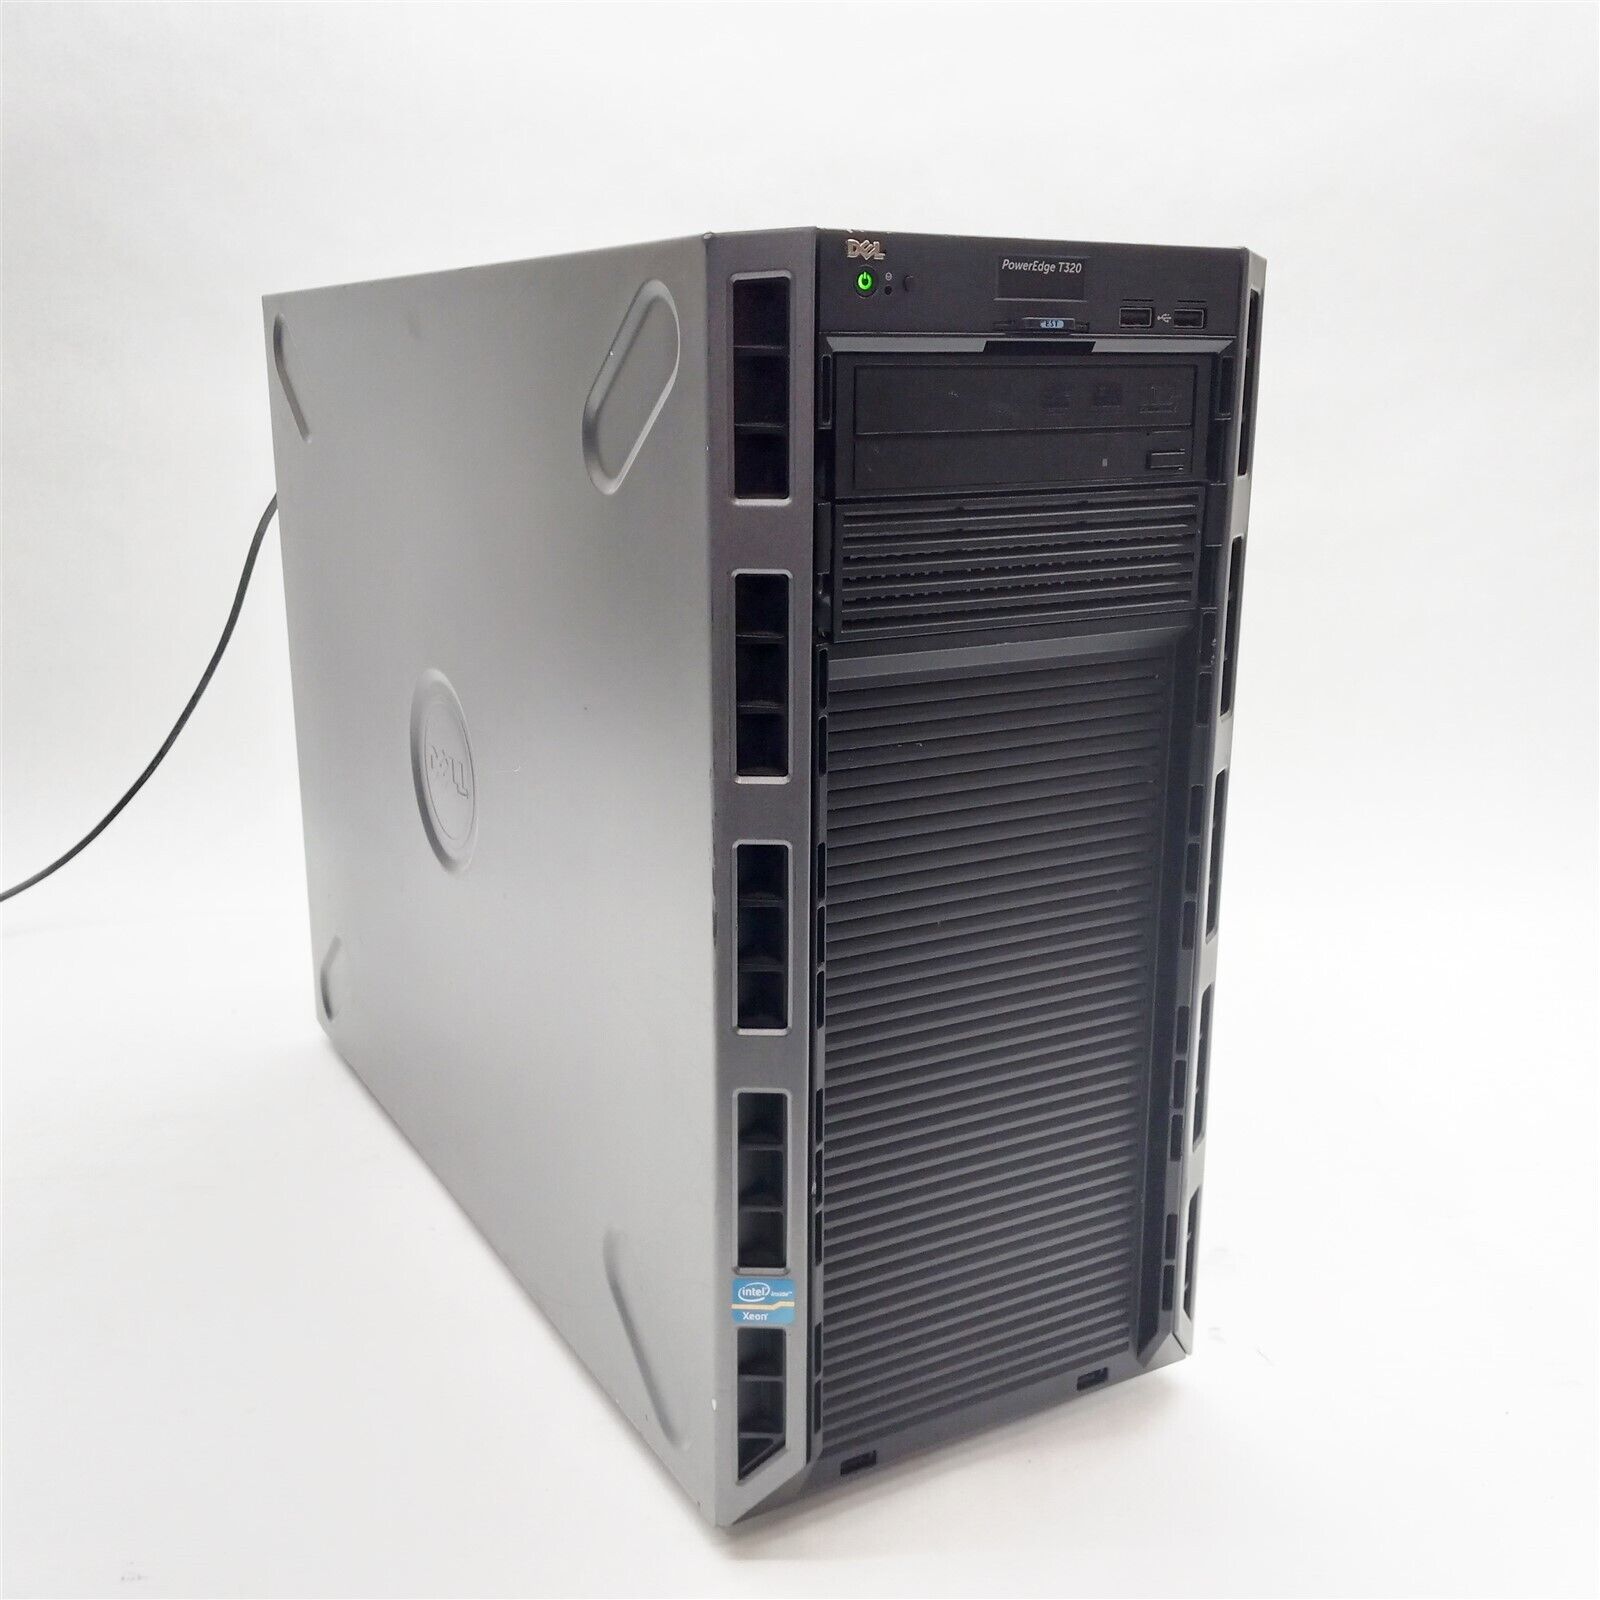 Dell PowerEdge T320 4-Bay LFF Xeon E5-2407 2.20GHz 8GB NO HDD PERC S110 Server